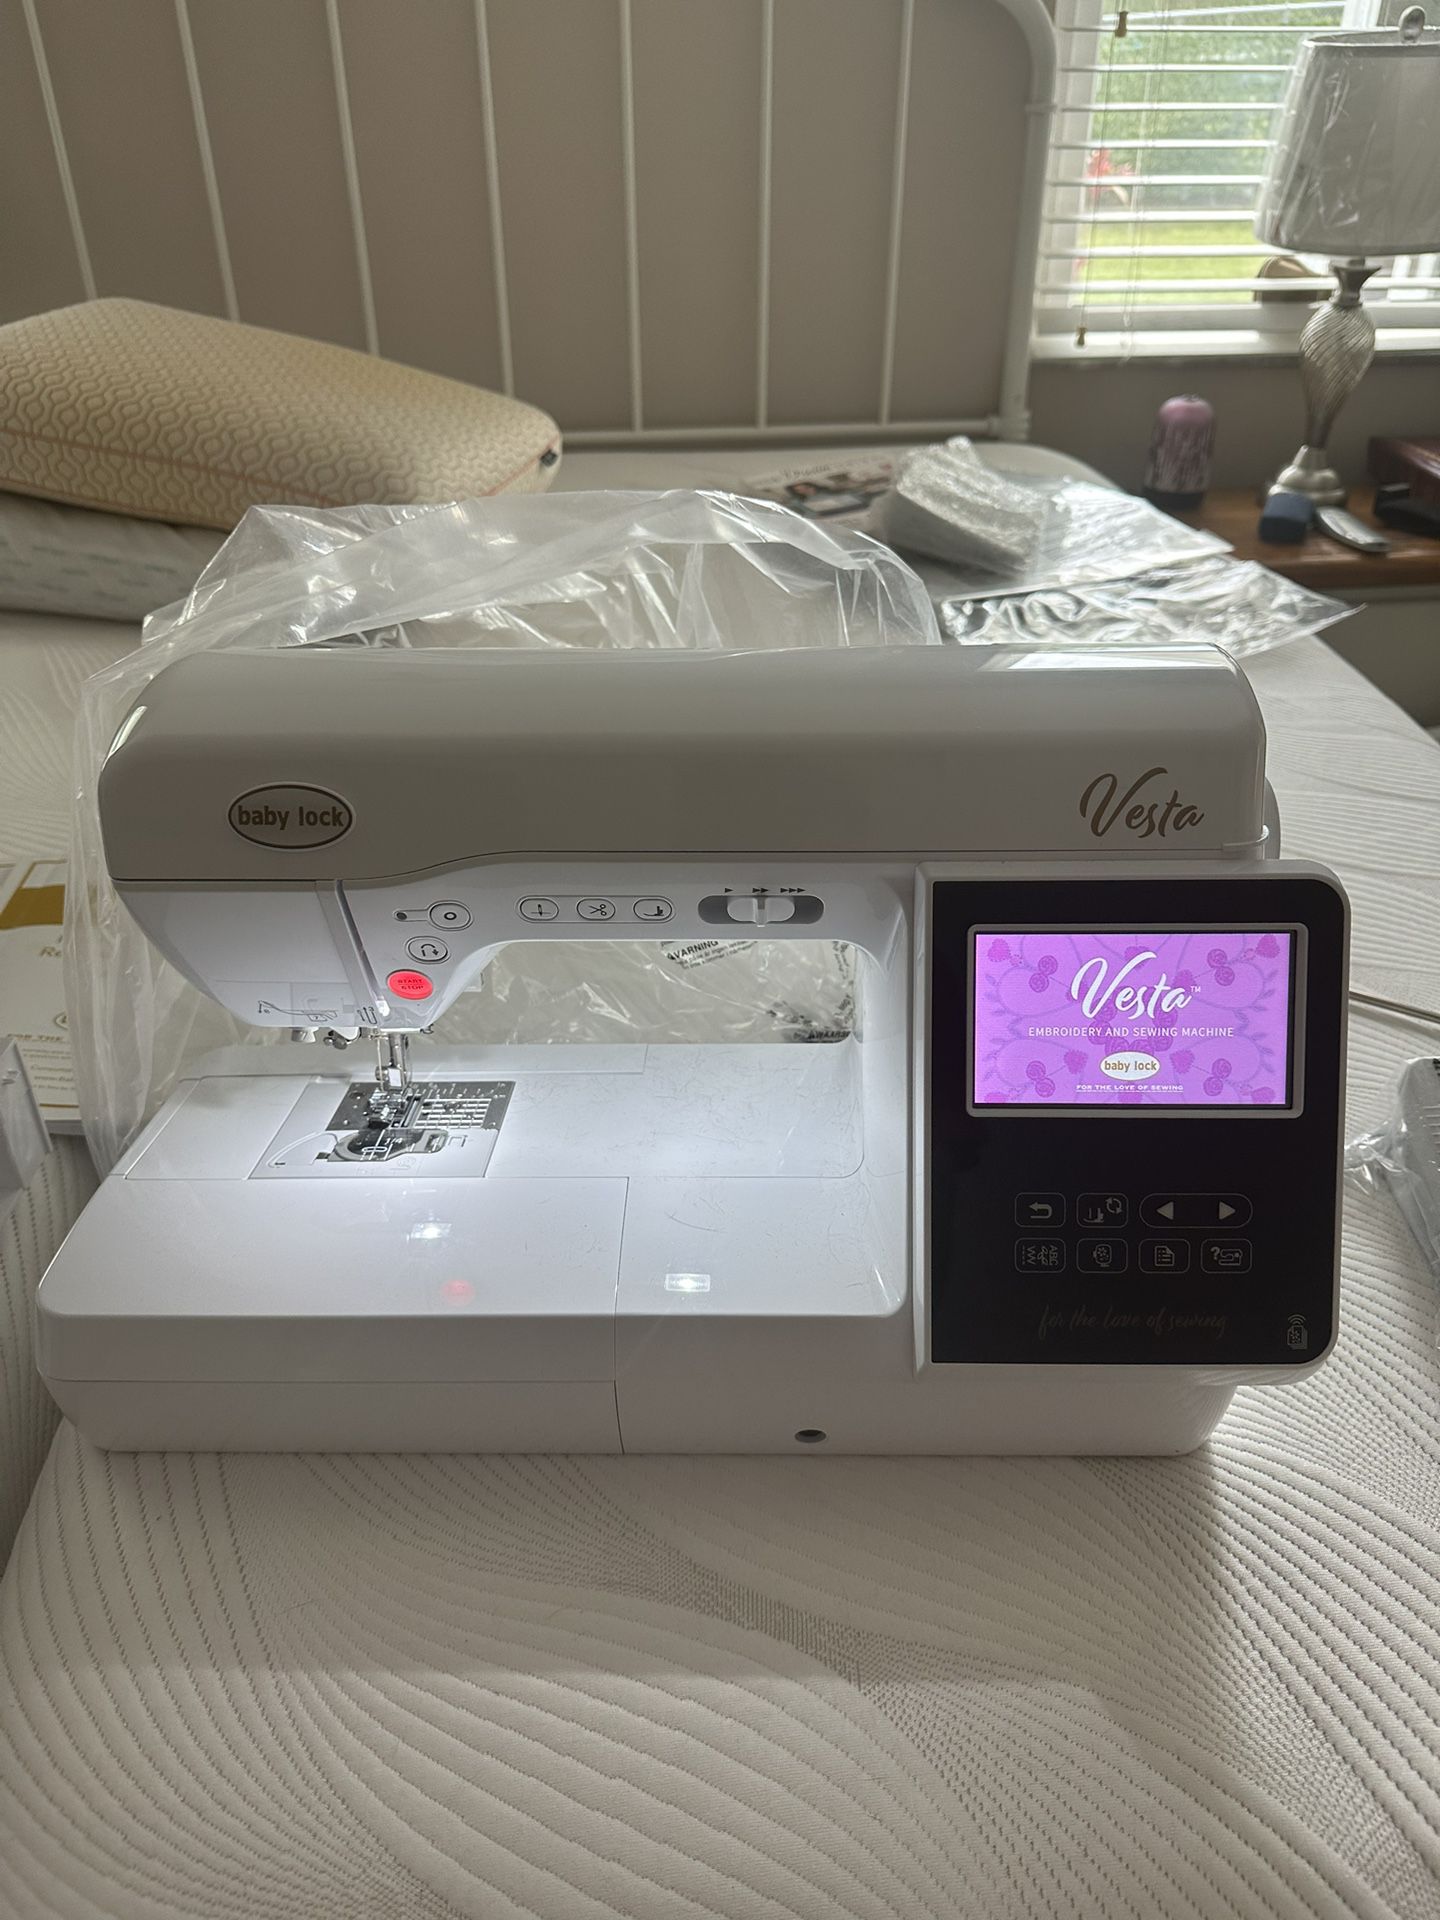 Baby Loc Vesta Sewing & Embroidery Machine 